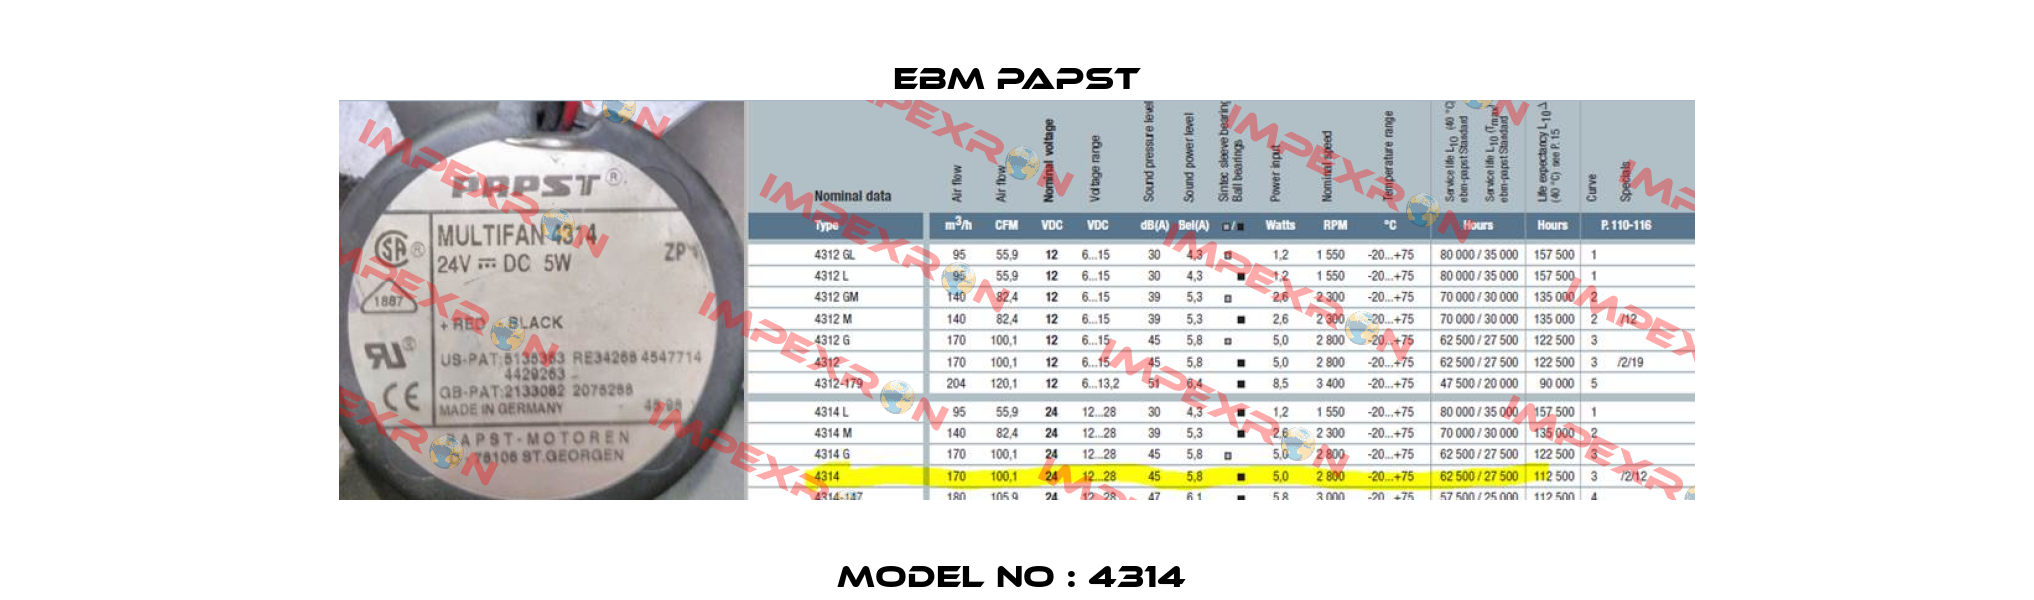 Model no : 4314  EBM Papst